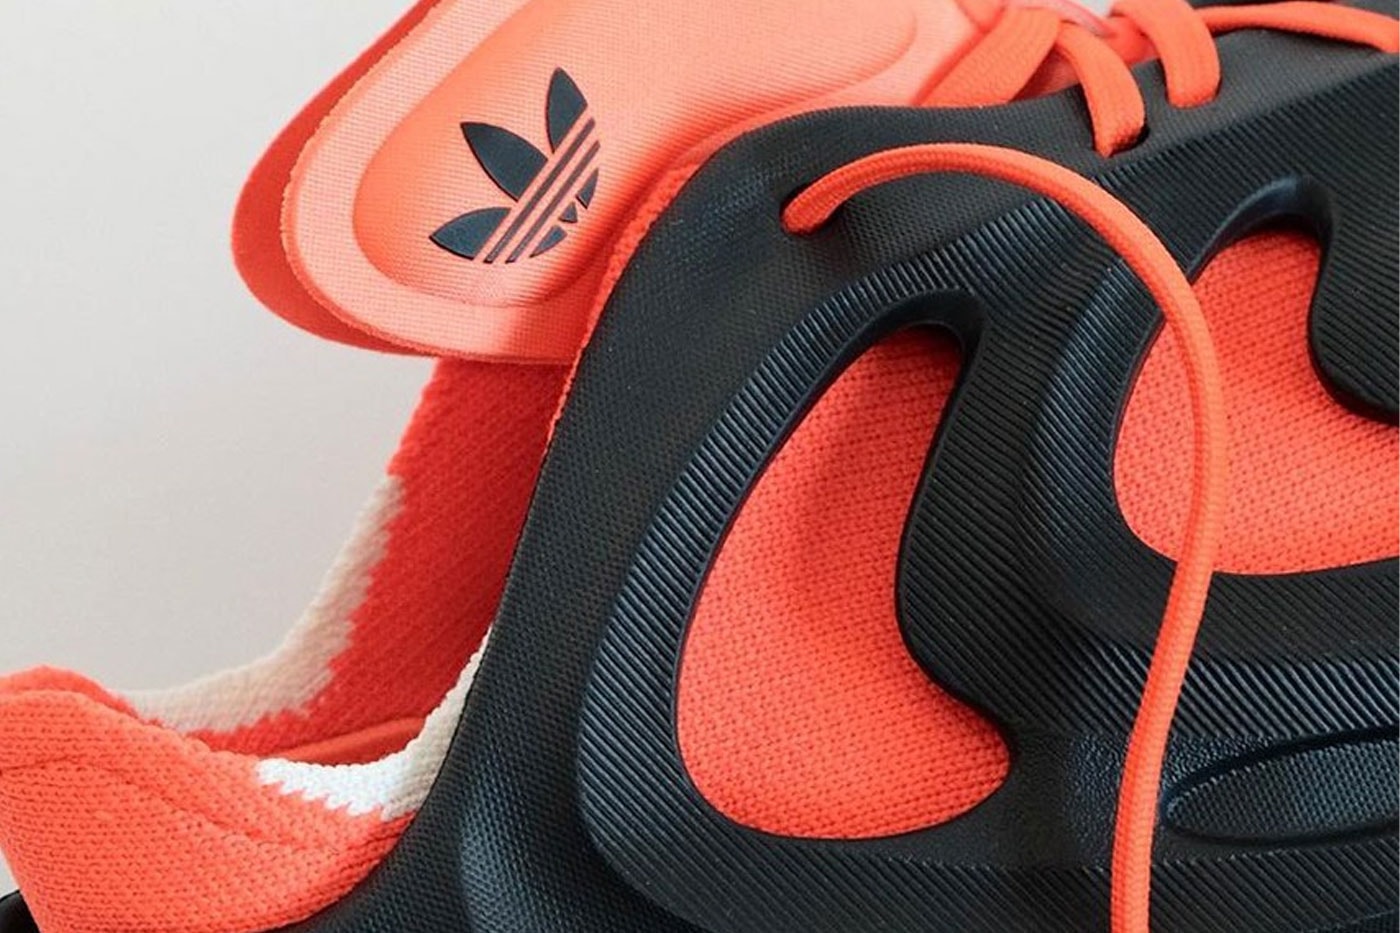 adidas originals adifom q black orange first look yeezy quake EVA primeknit release info